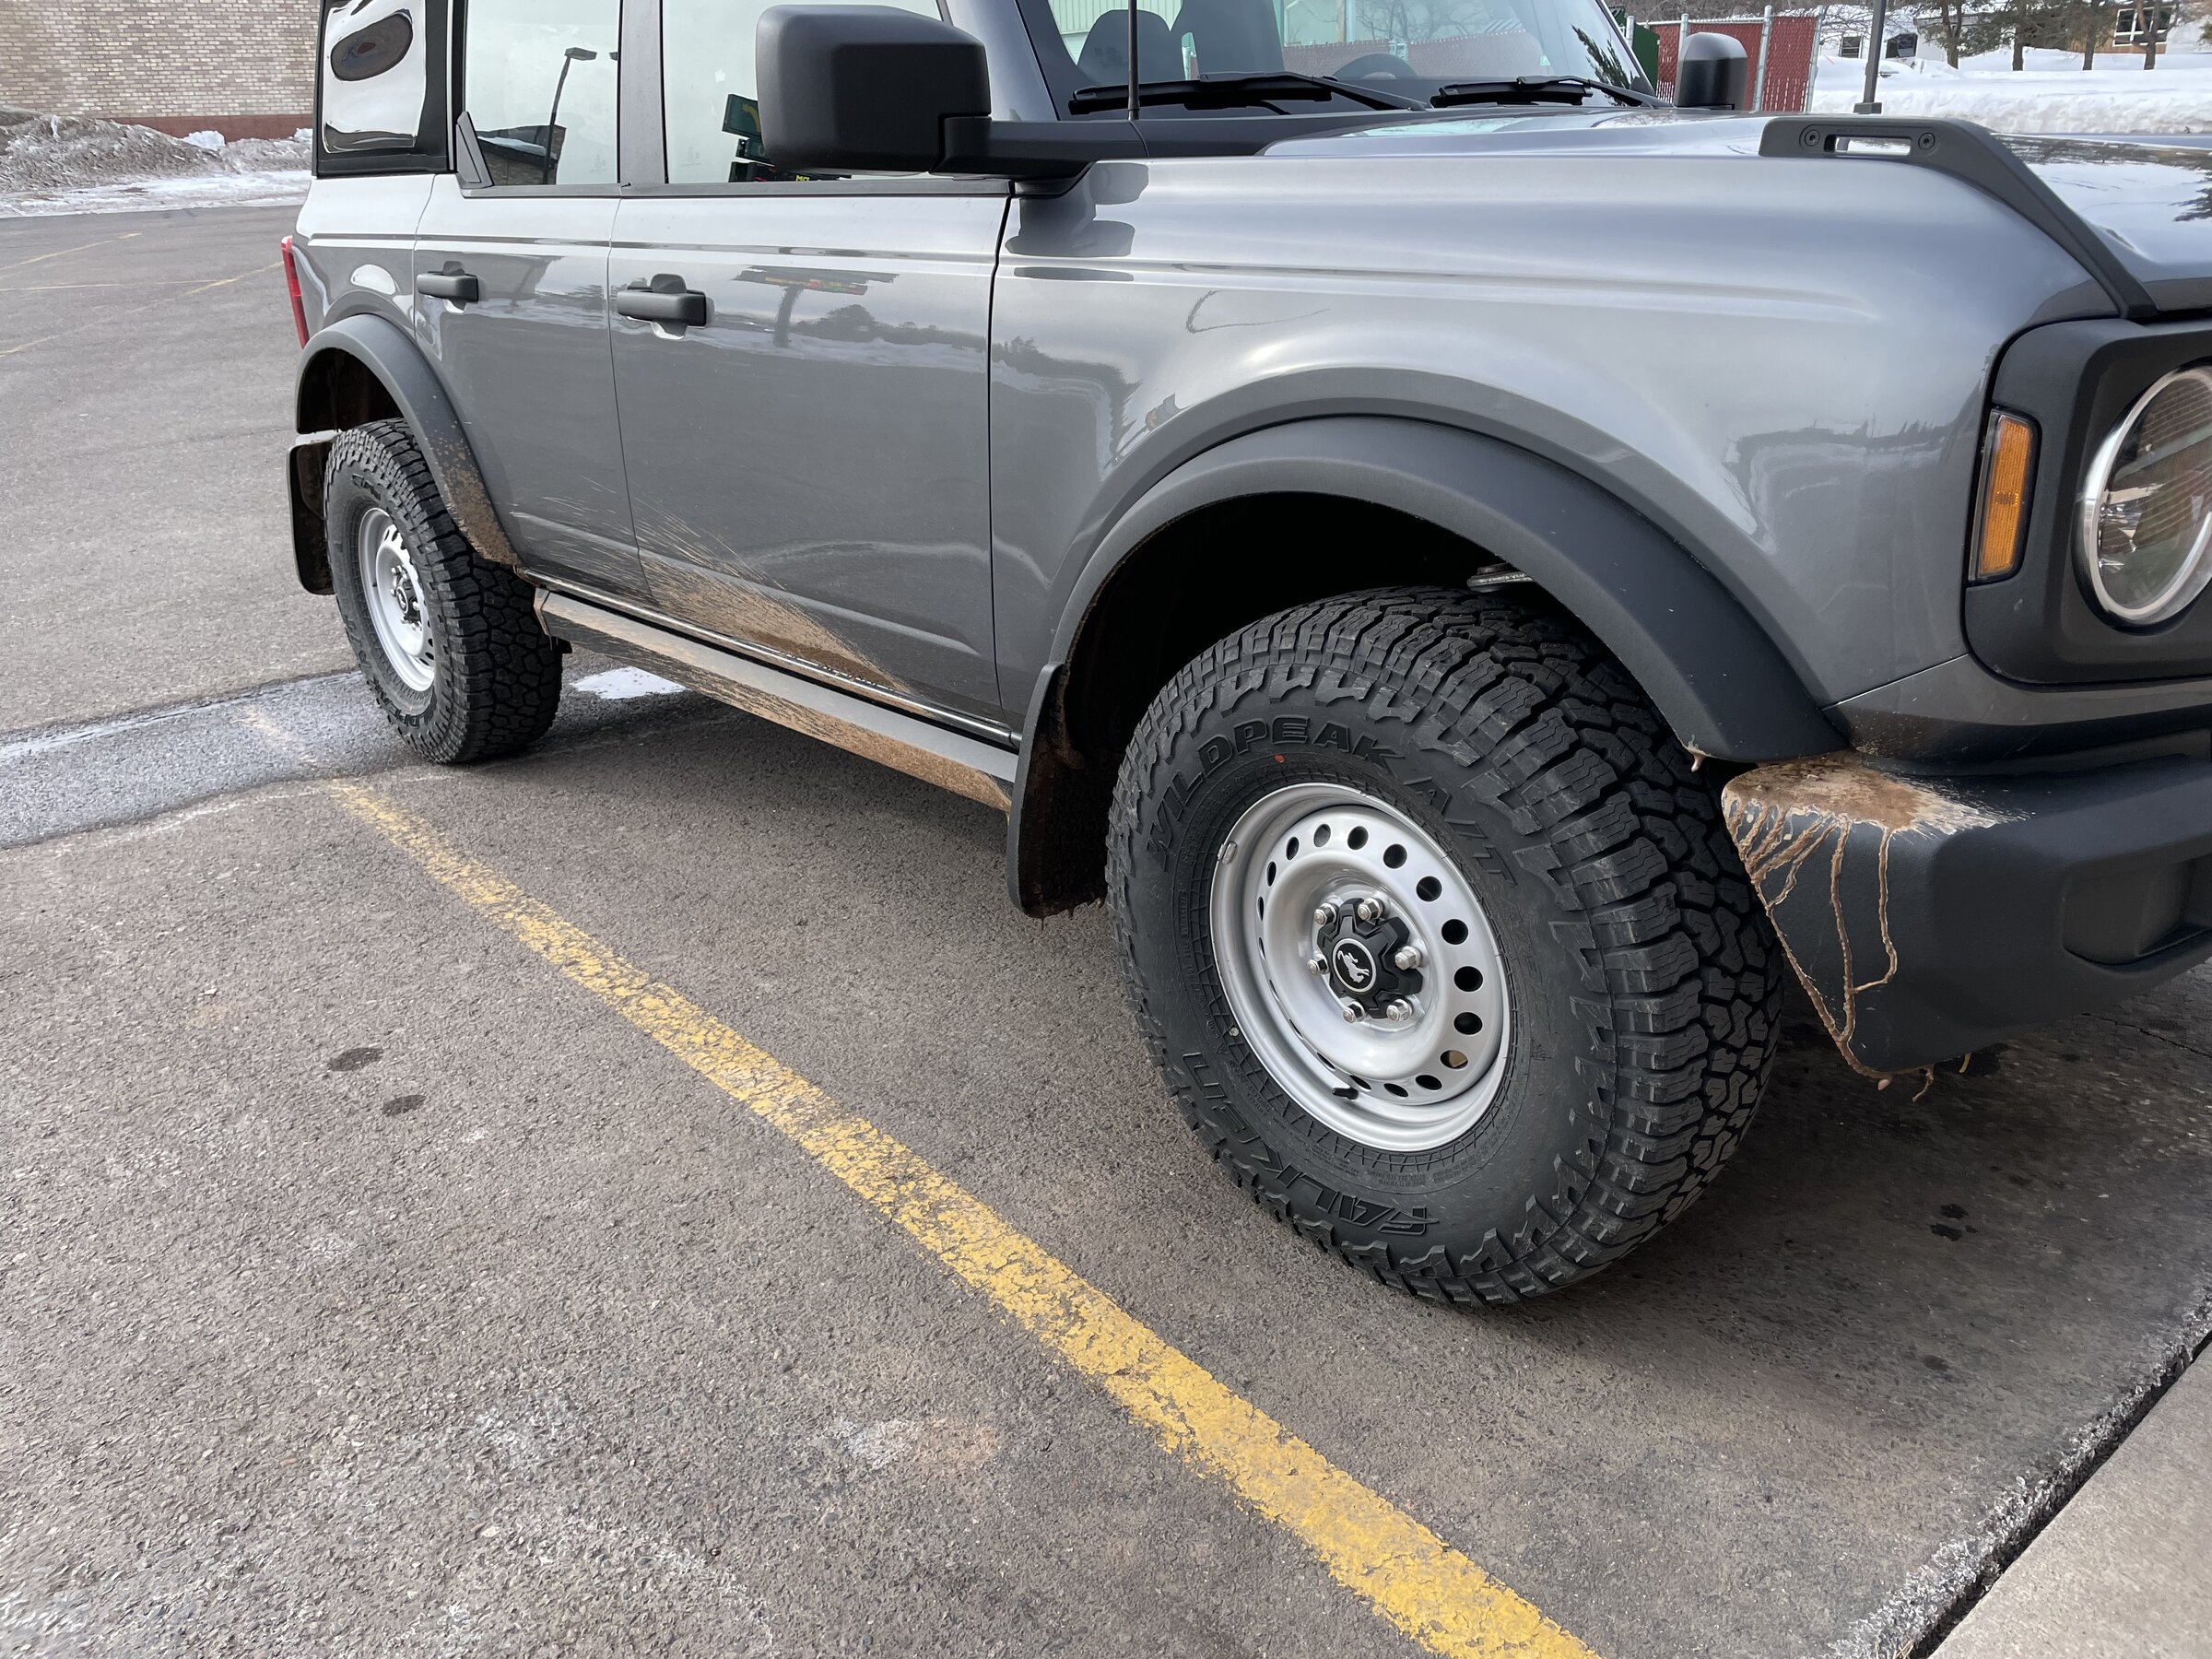 Ford Bronco RekGen mud flaps didn’t save my paint D464F69B-7465-4D52-8134-C935A83C8FE1